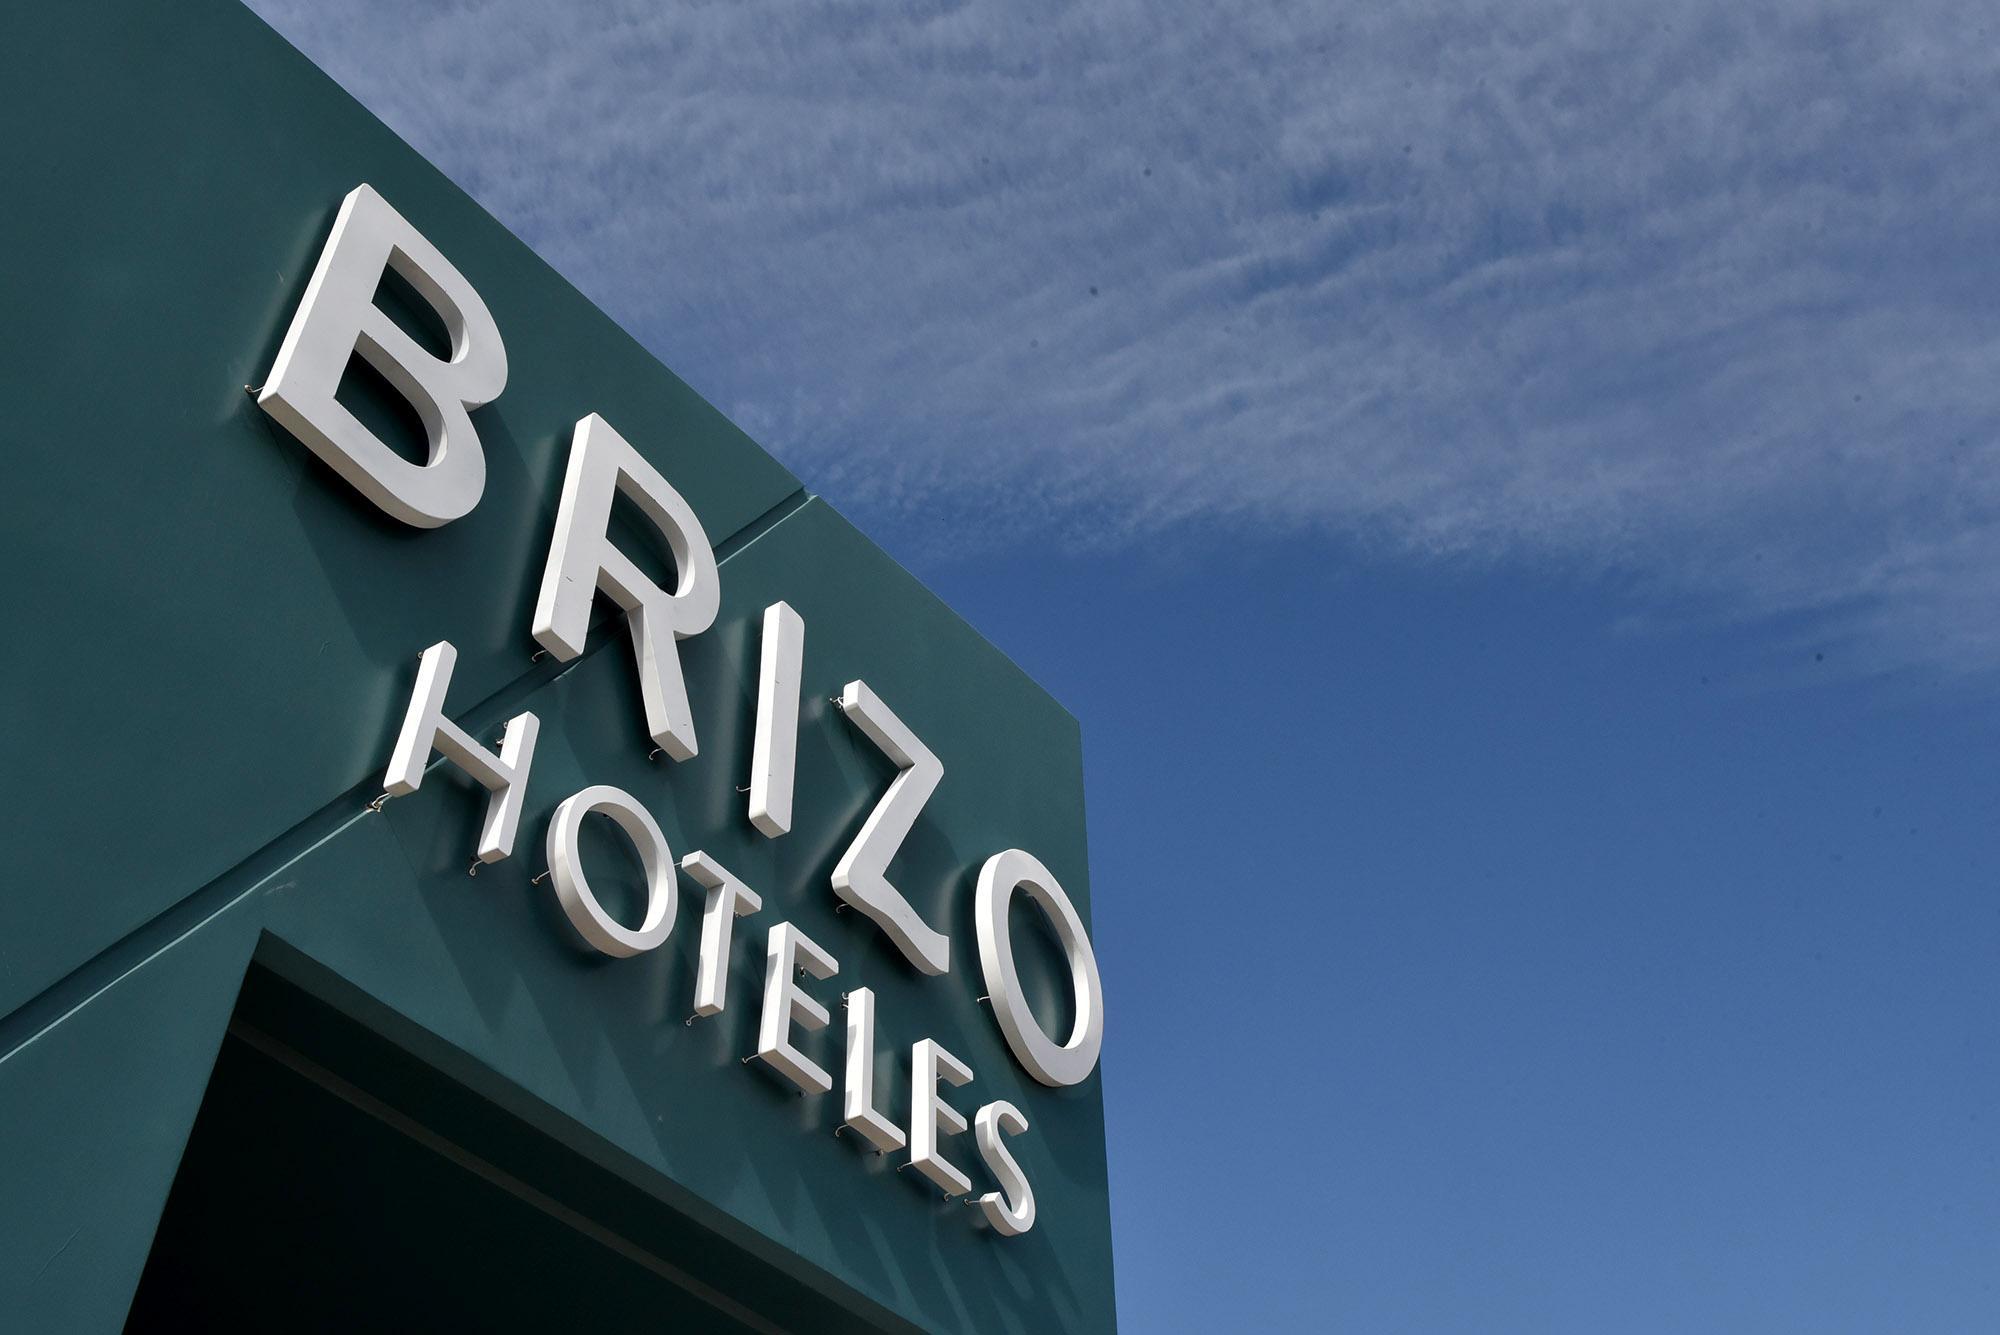 Brizo Salta Hotel Exterior photo